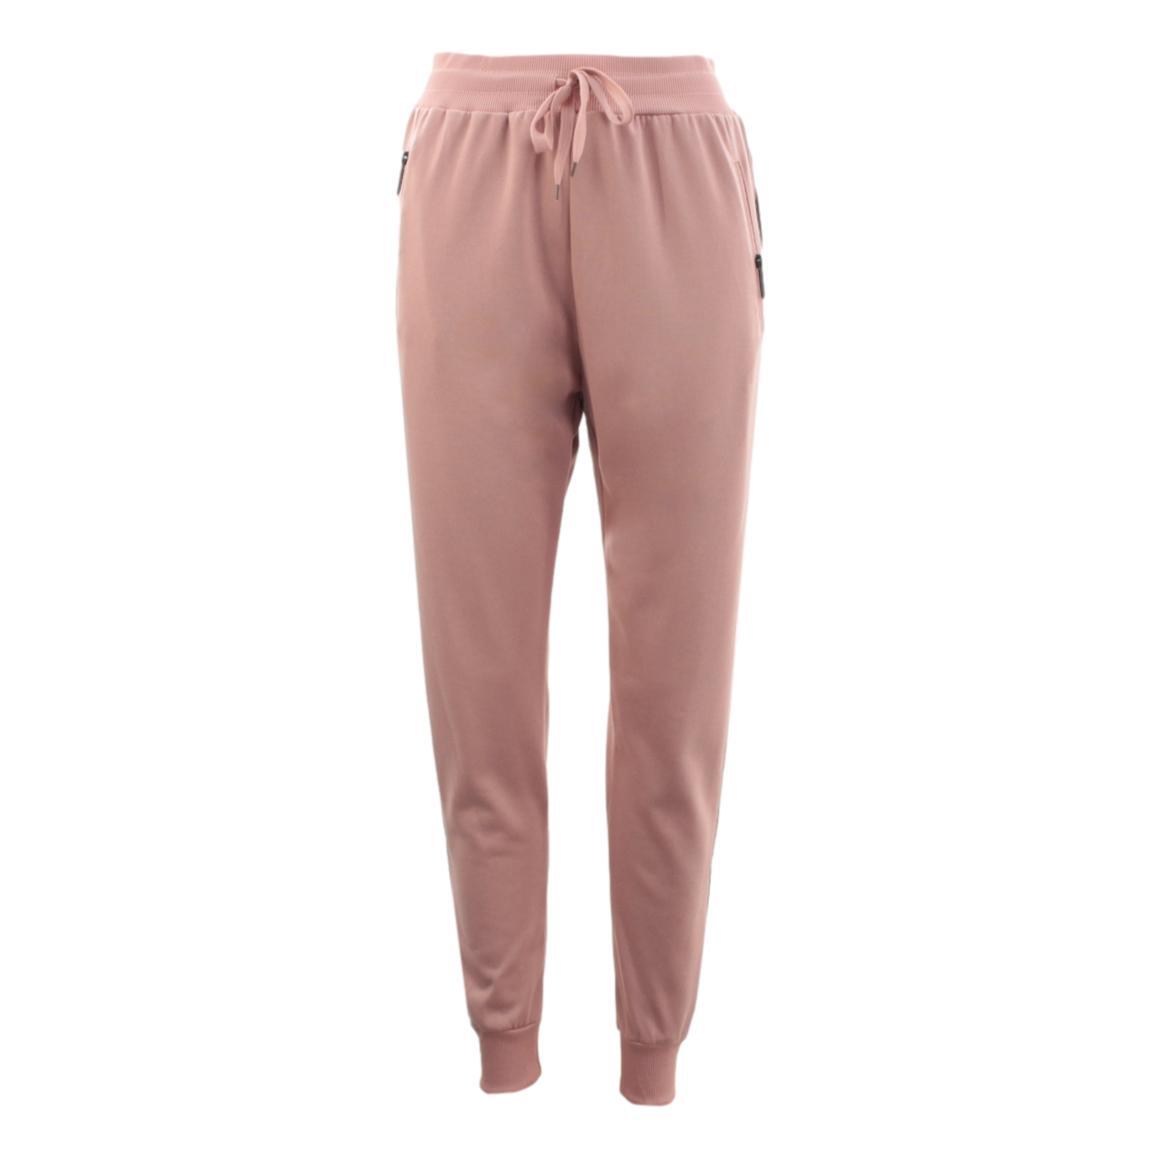 Women’s Soft Plush Lounge Sleep Pyjama Pajama Pants Fleece Winter Sleepwear  